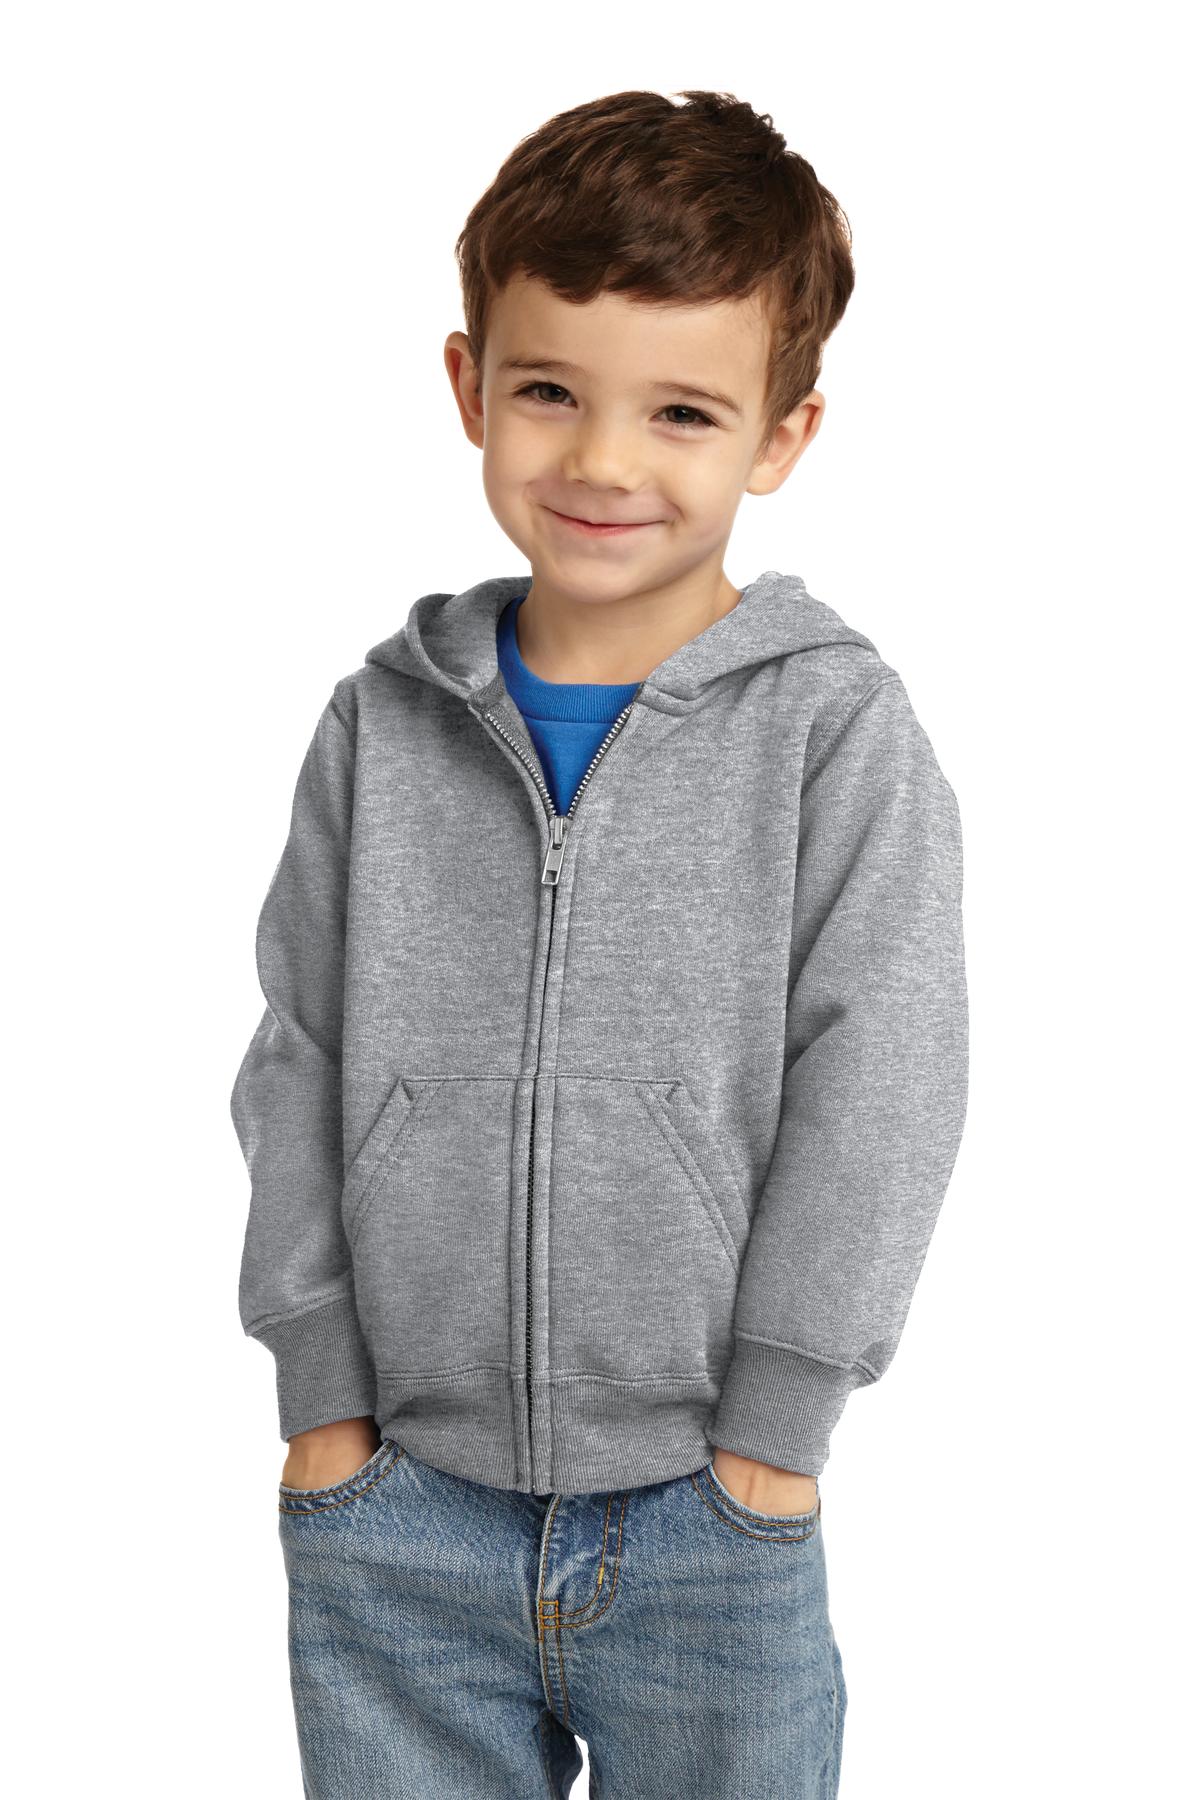 Toddler Boys Zip Up Hoodie Jacket Full Zipper Sweatshirt for 3-8 Years Kids